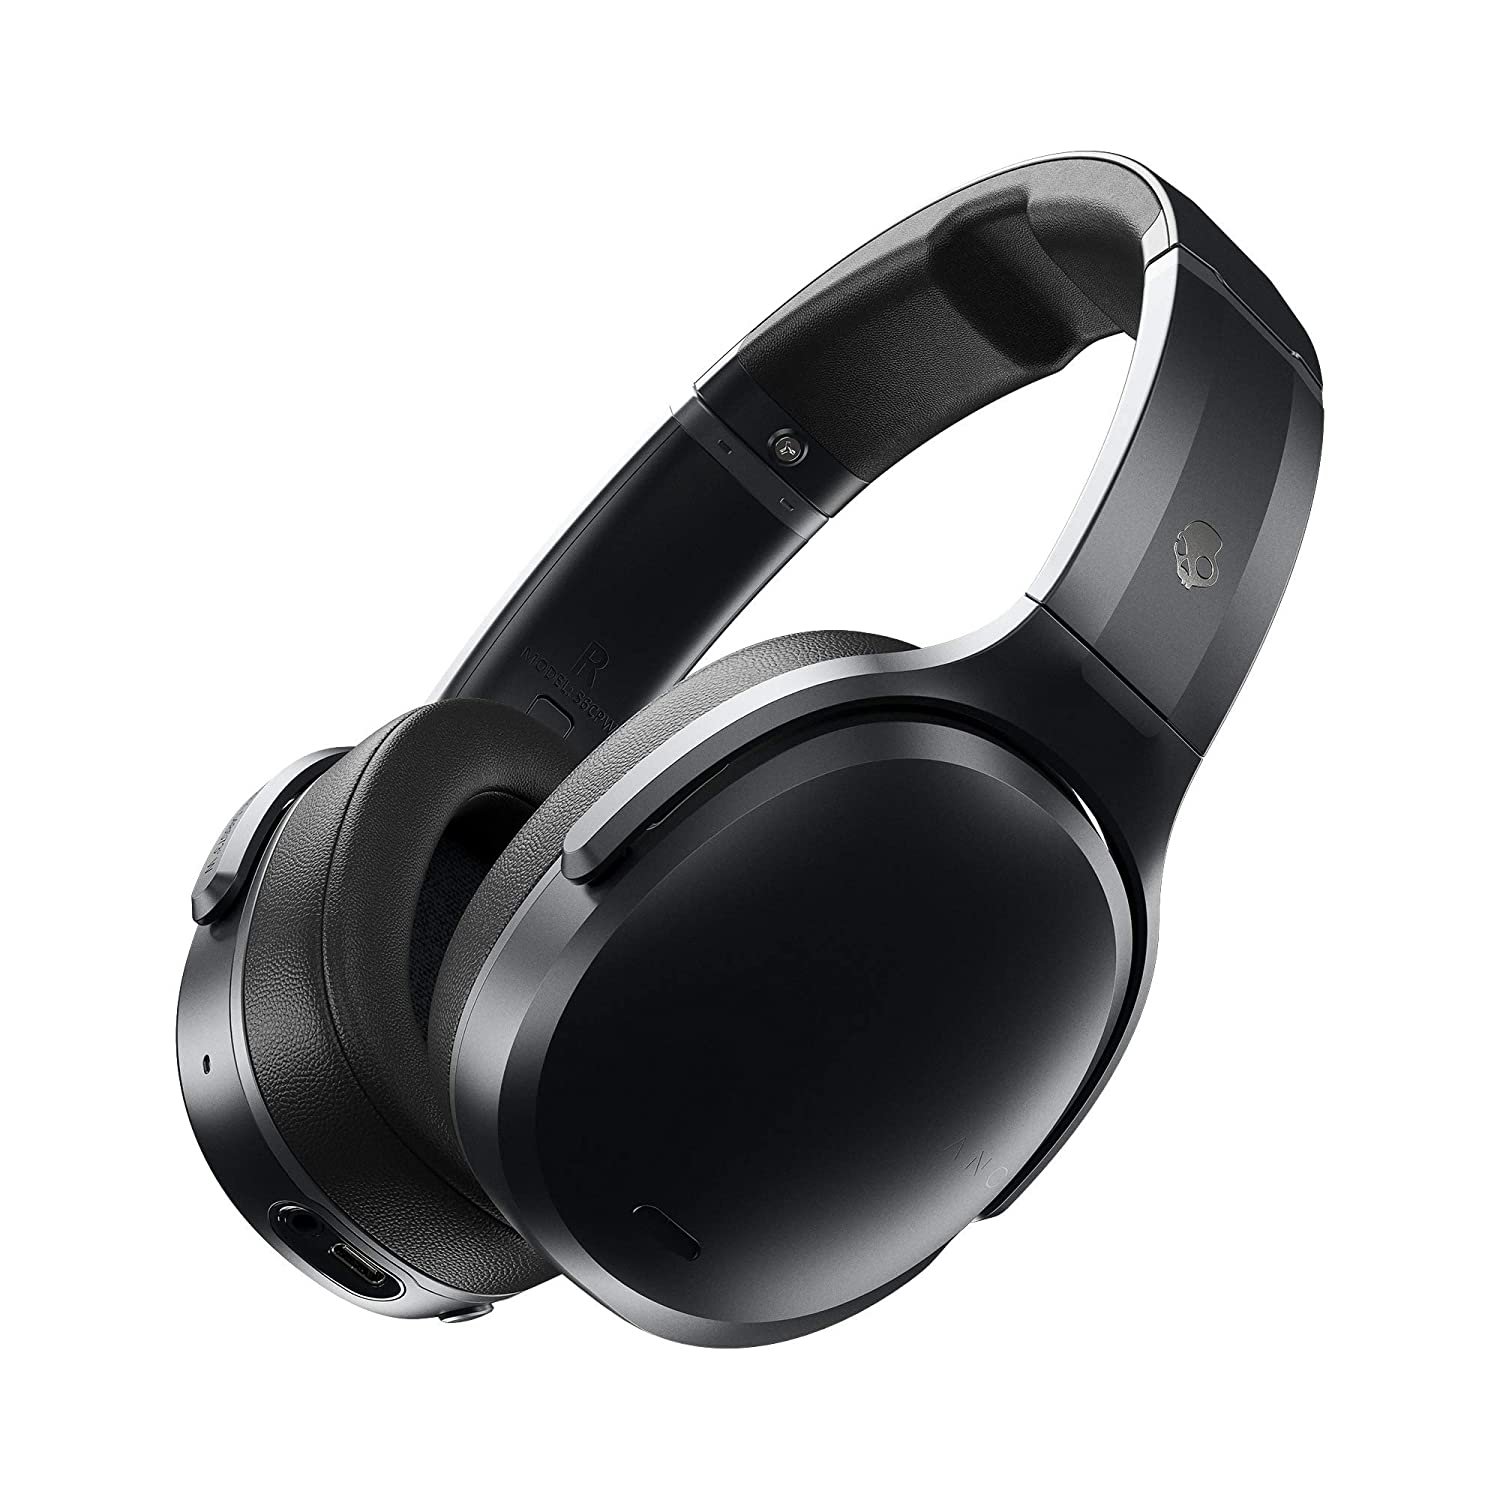 Skullcandy Crusher Active Noise Cancellation Wireless Over-Ear Headphone (Black)